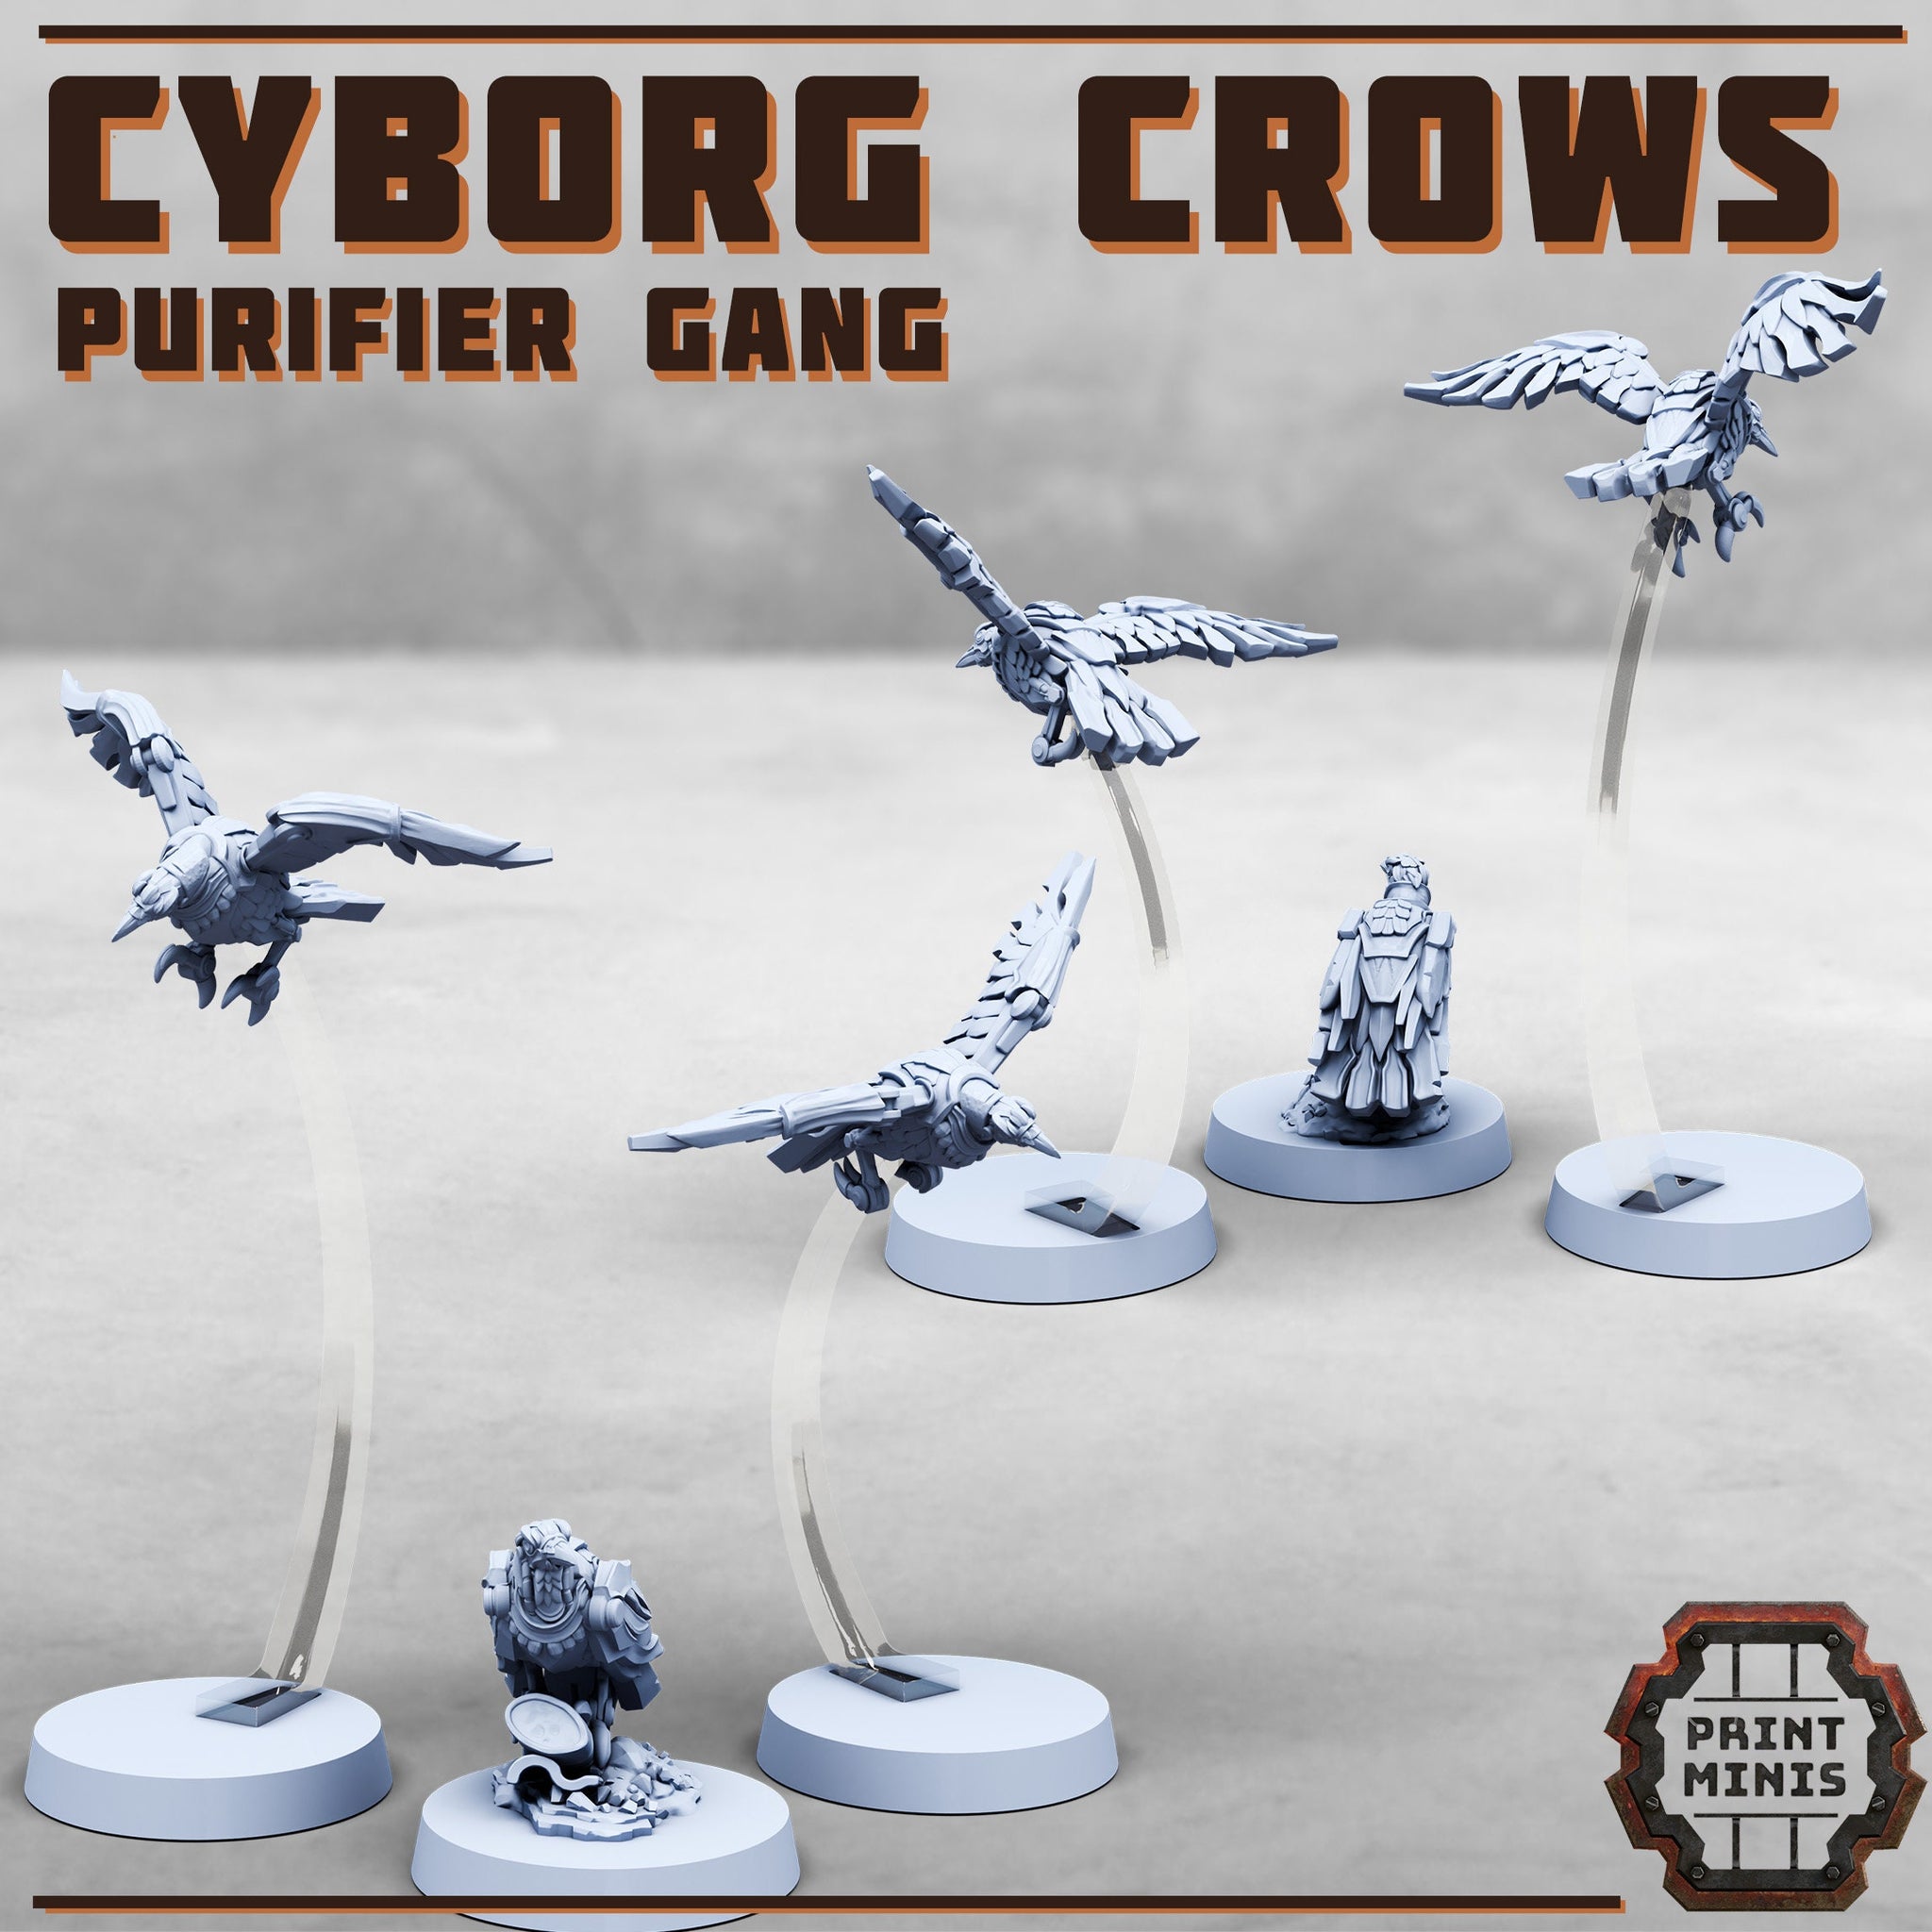 Cyborg Crows - Purifier Gang